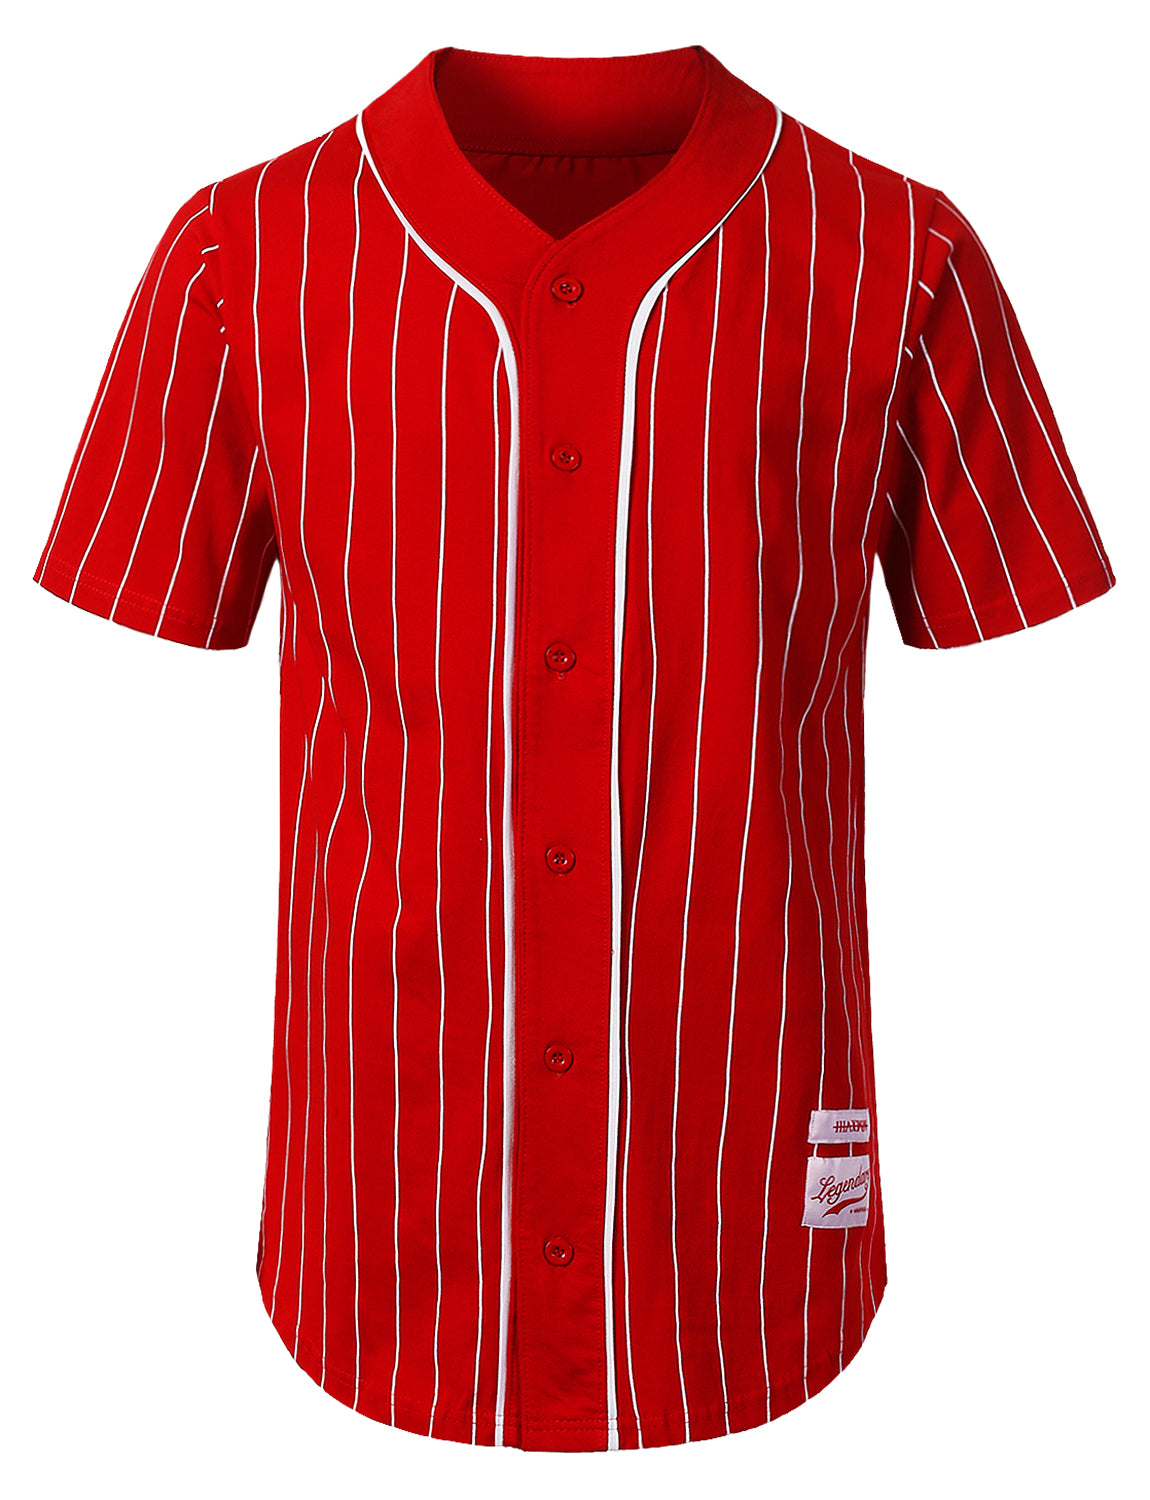 red pinstripe baseball jersey off 52 